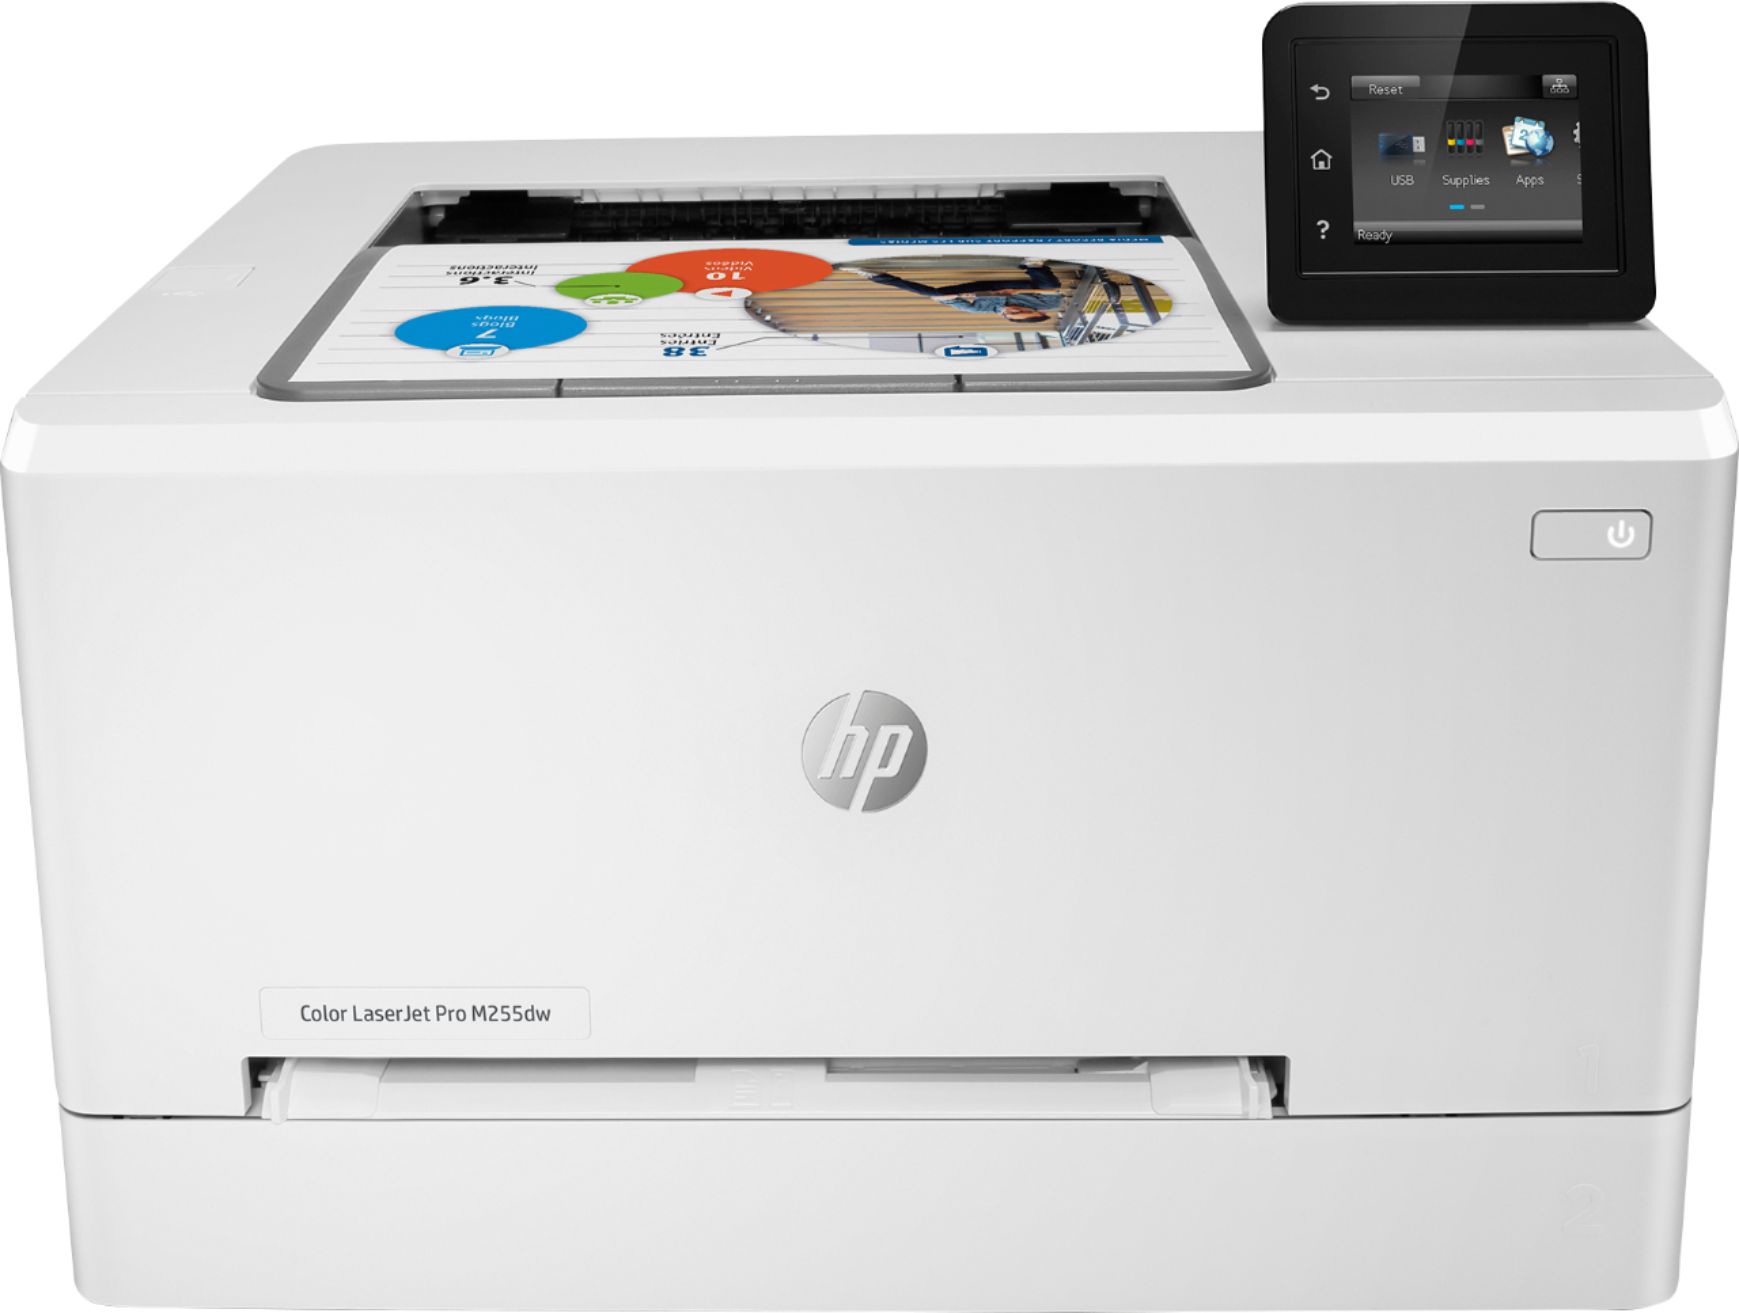 HP M255dw Color Laser Printer White M255DW - Best Buy